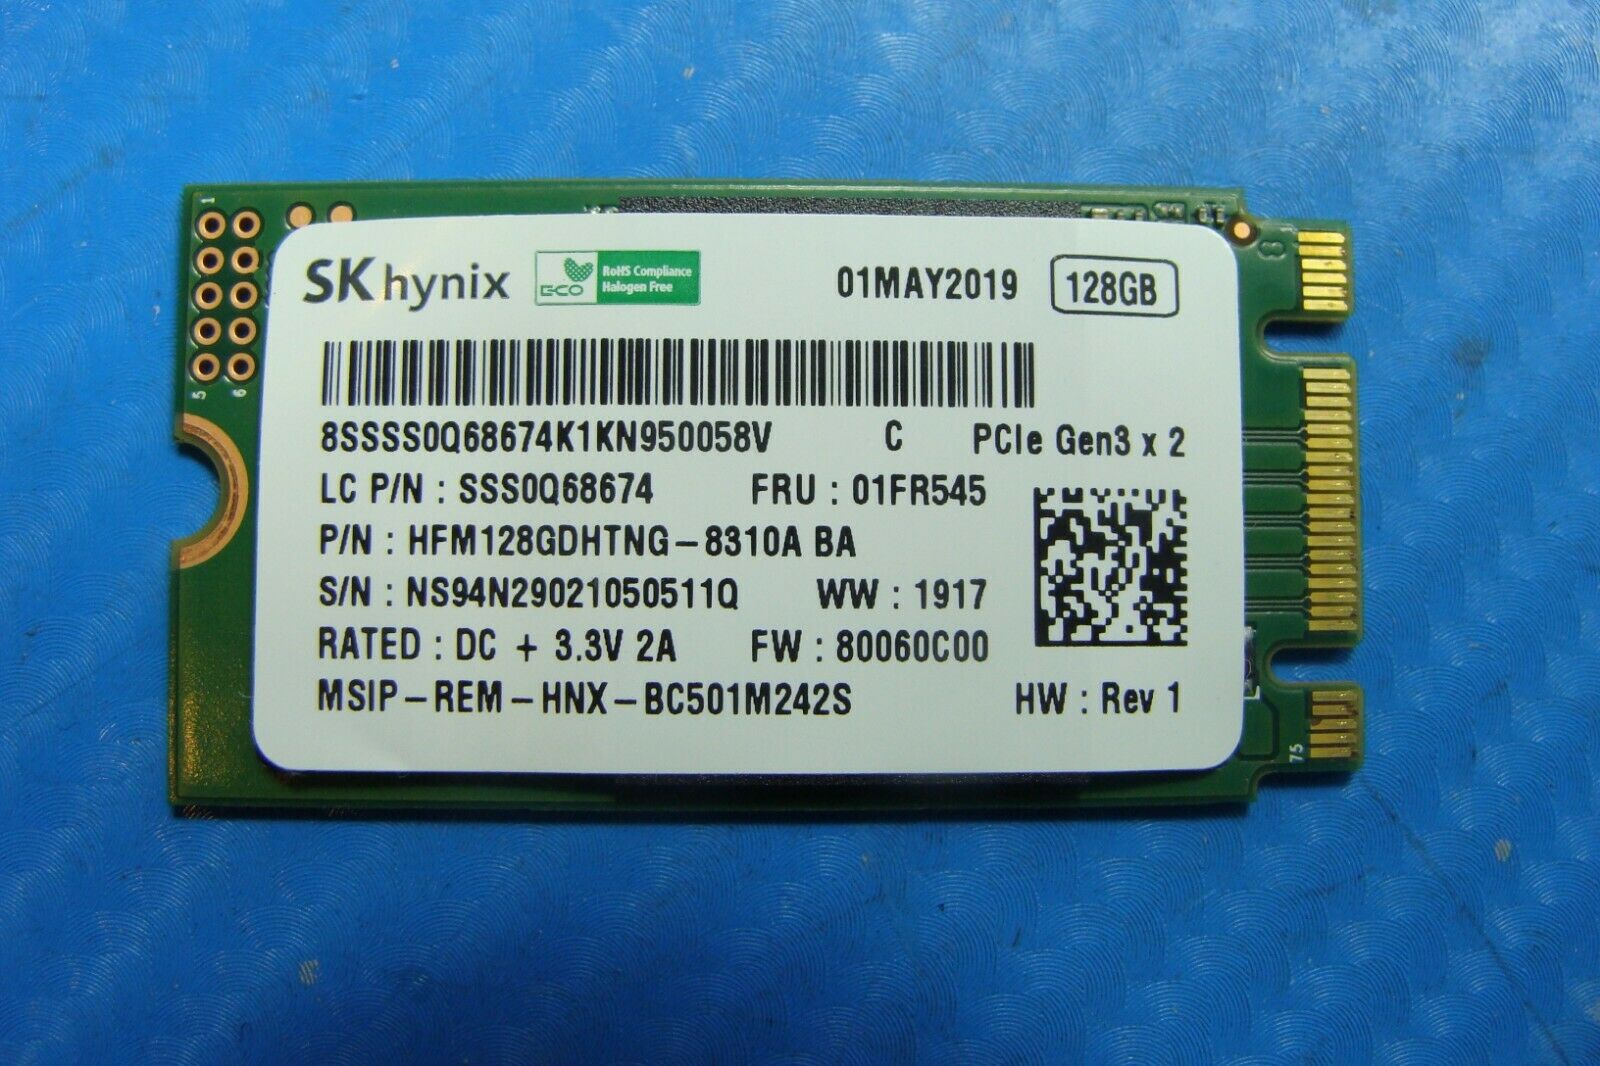 Lenovo Flex-14IWL SK hynix 128Gb NVMe M.2 Solid State Drive hfm128gdhtng-8310a 